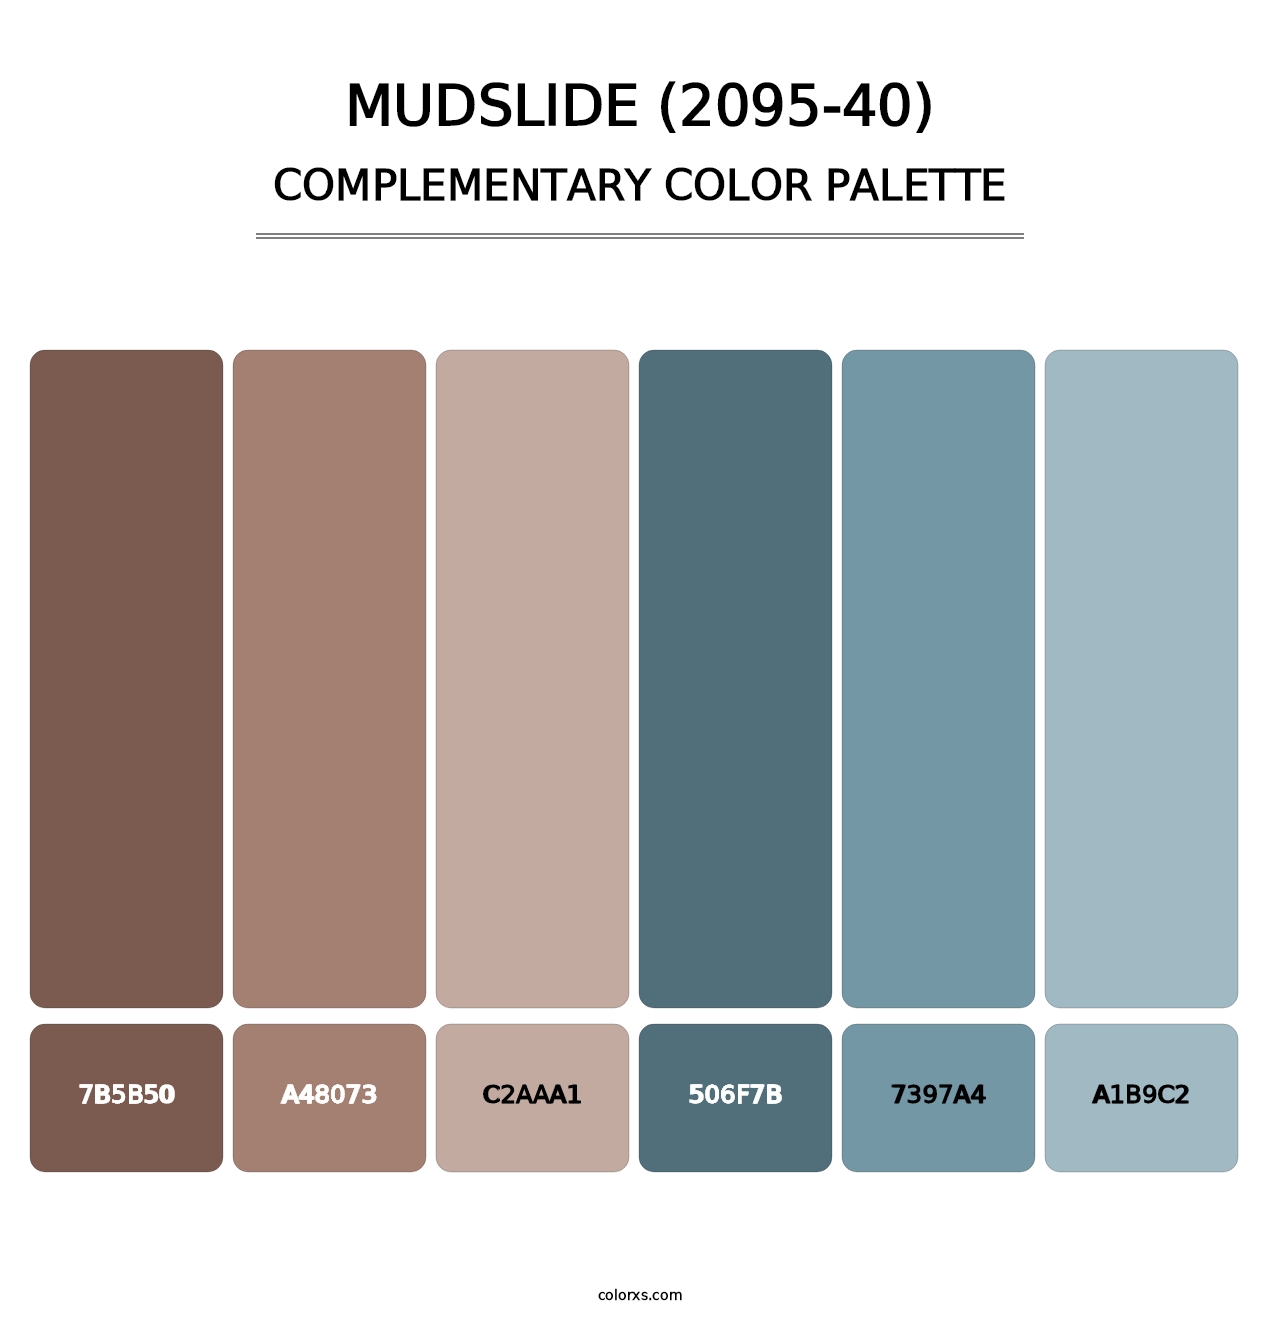 Mudslide (2095-40) - Complementary Color Palette